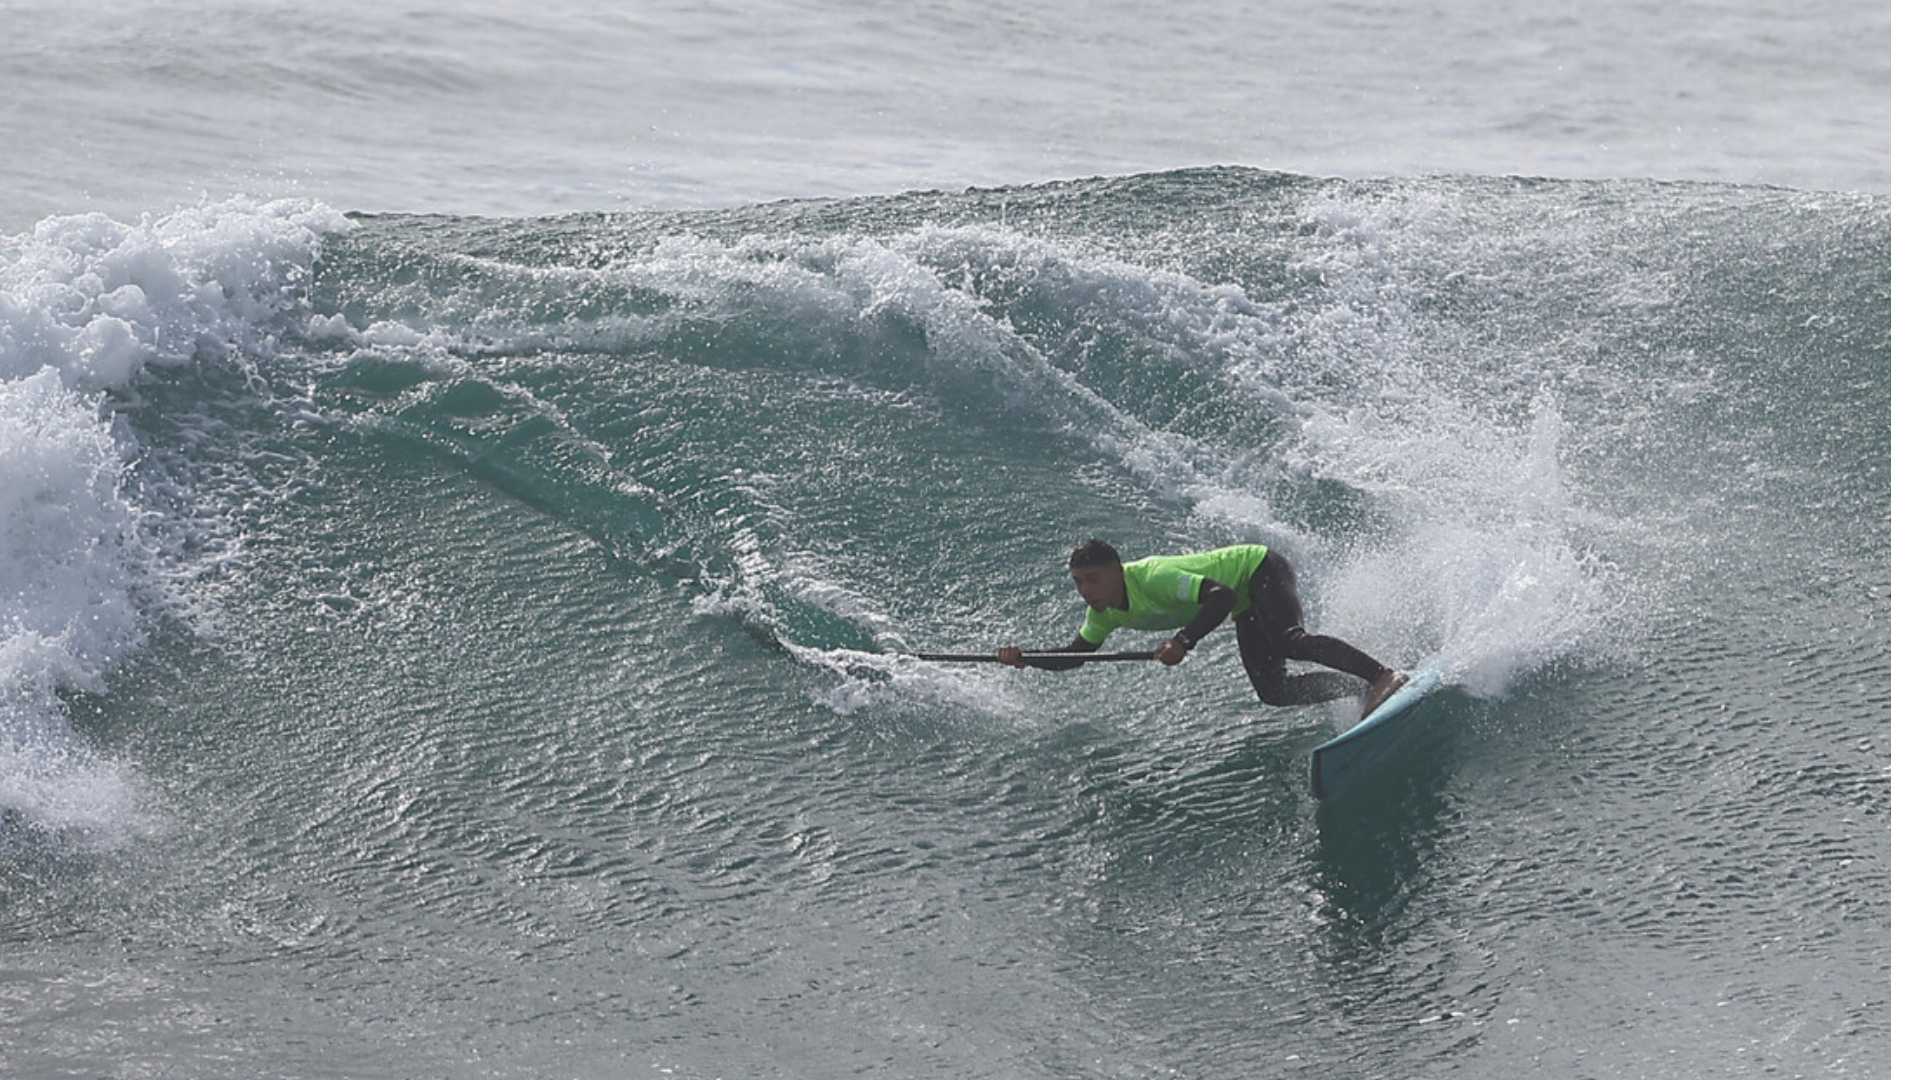 Chilean Gabriel Salazar qualifies for the Main Draw in SUP surfing